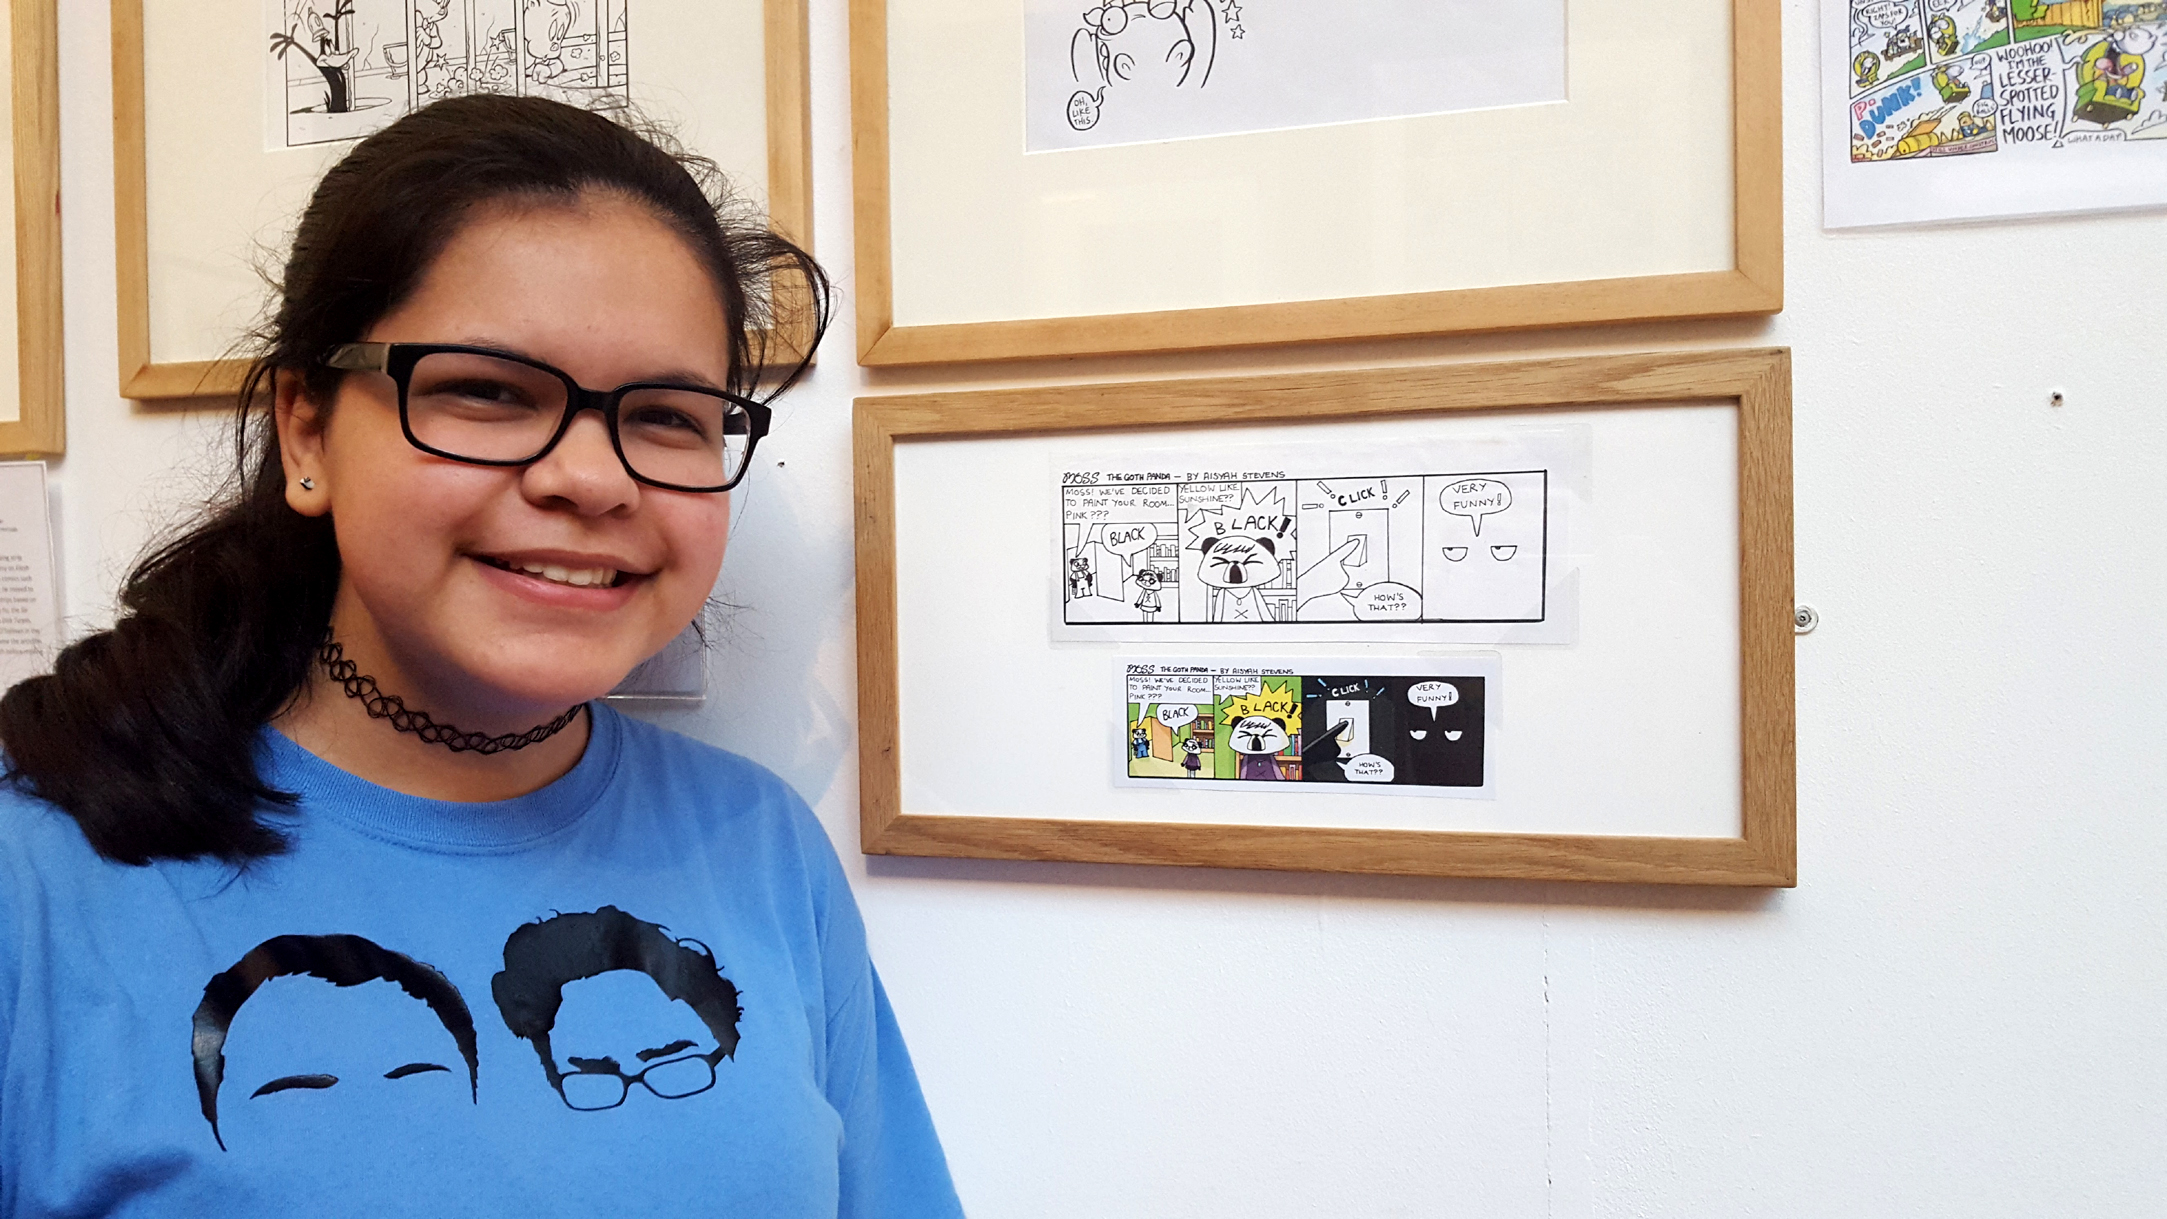 School girl showing her own comic book art